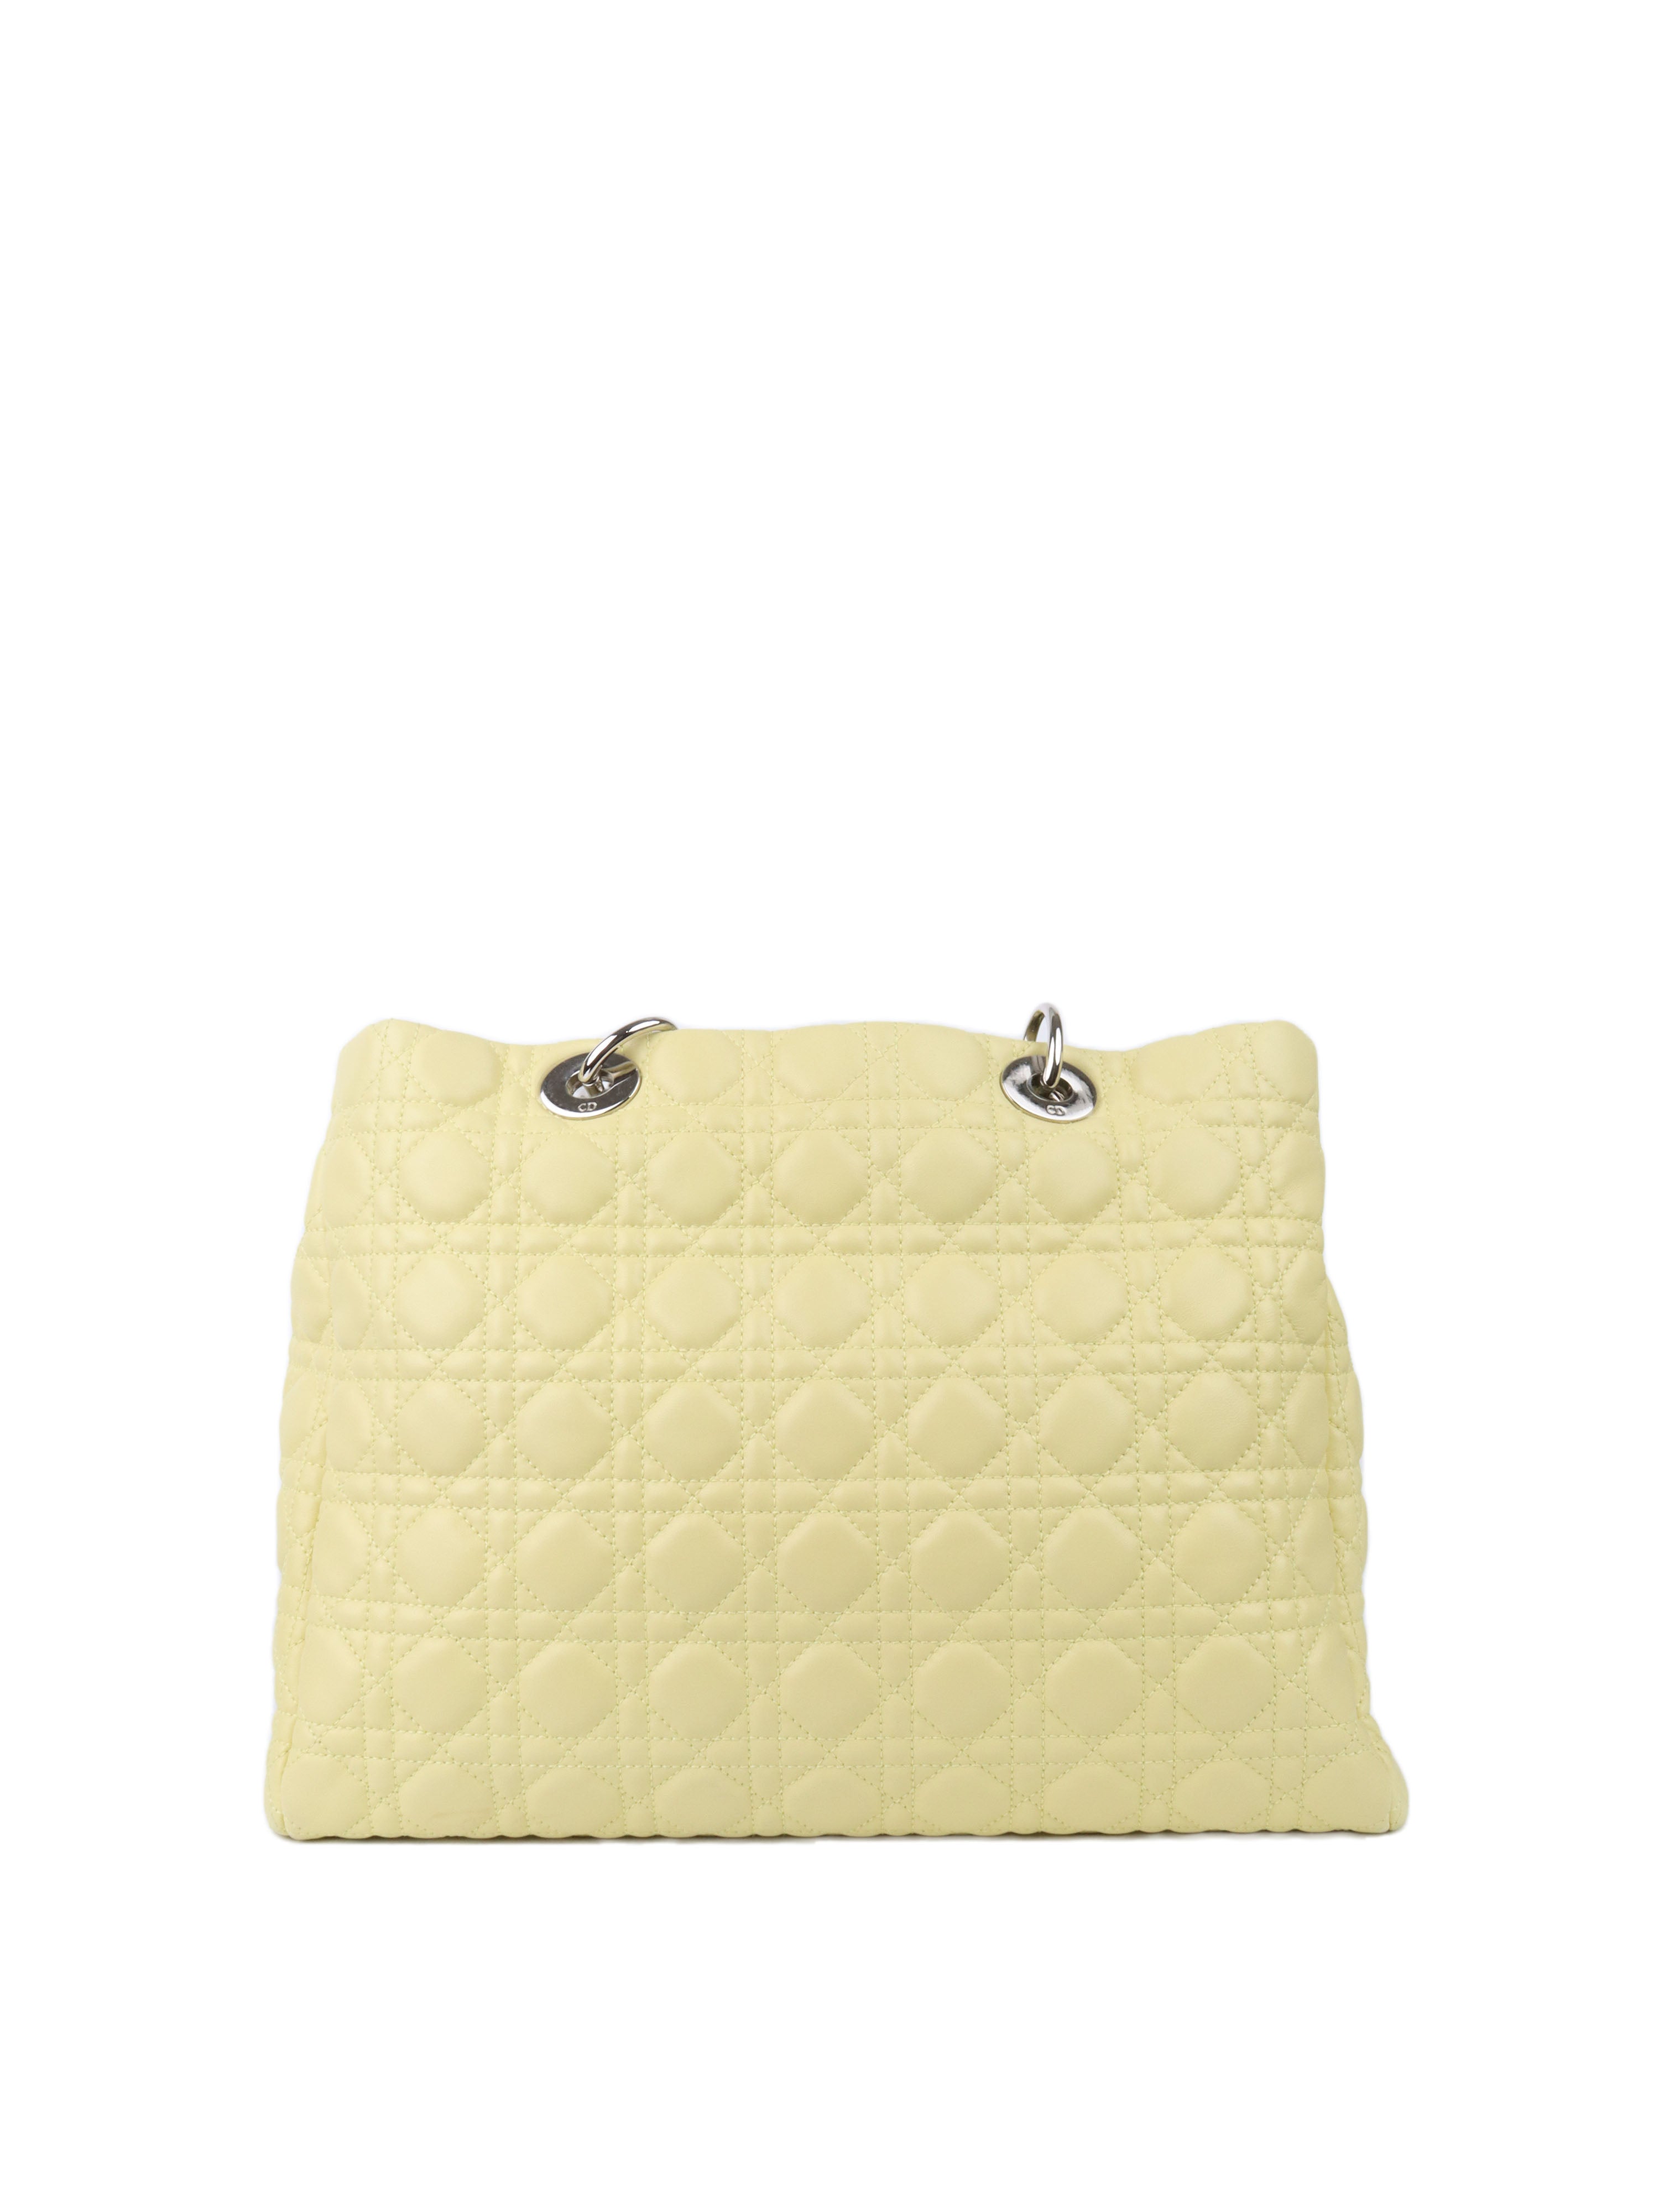 Dior Light Yellow Lambskin Cannage Bag SHW.